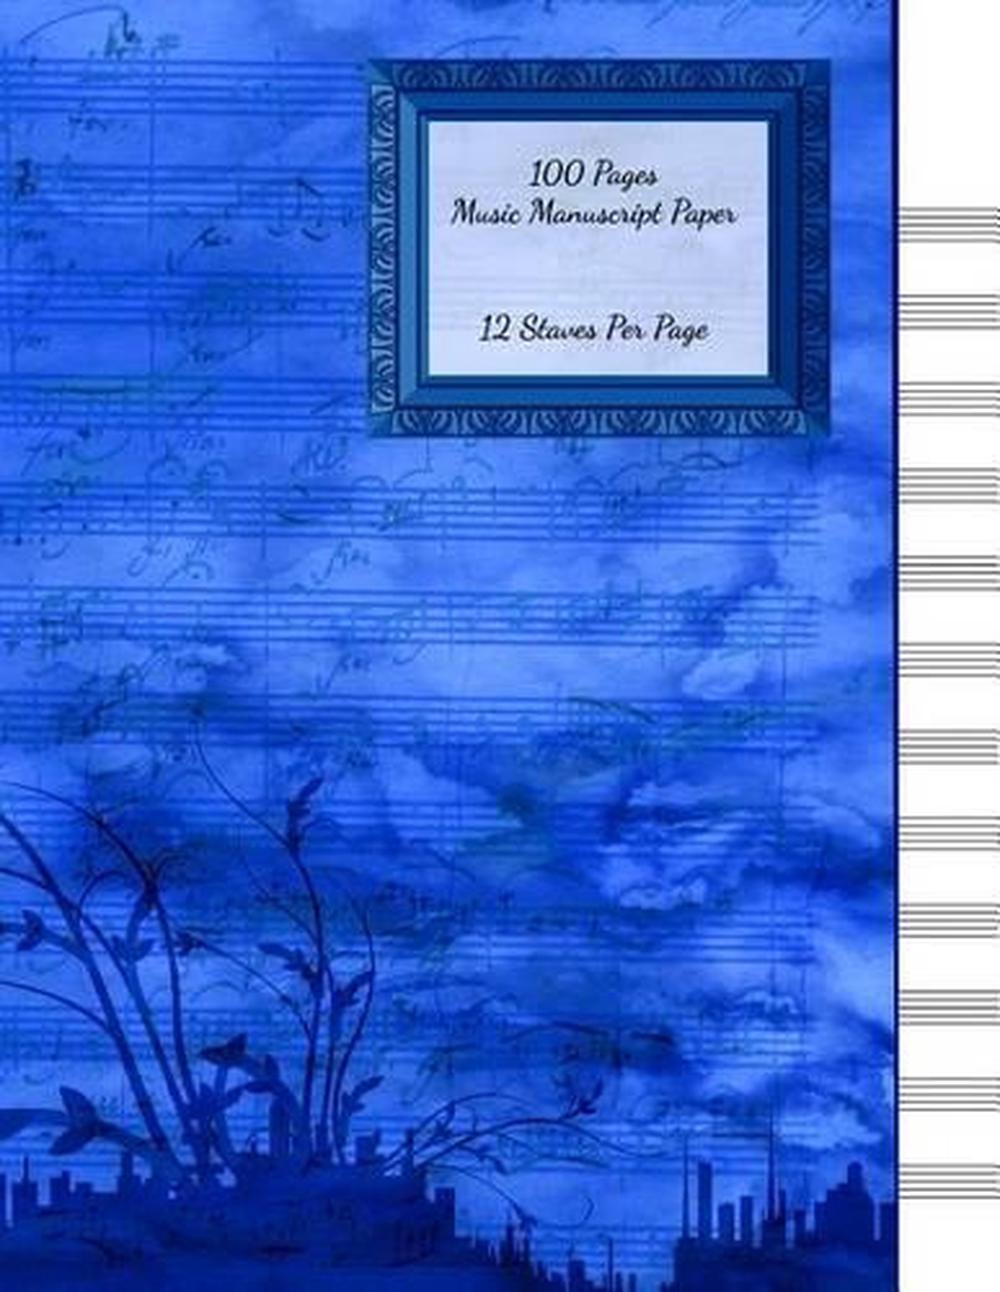 hardcover music manuscript paper